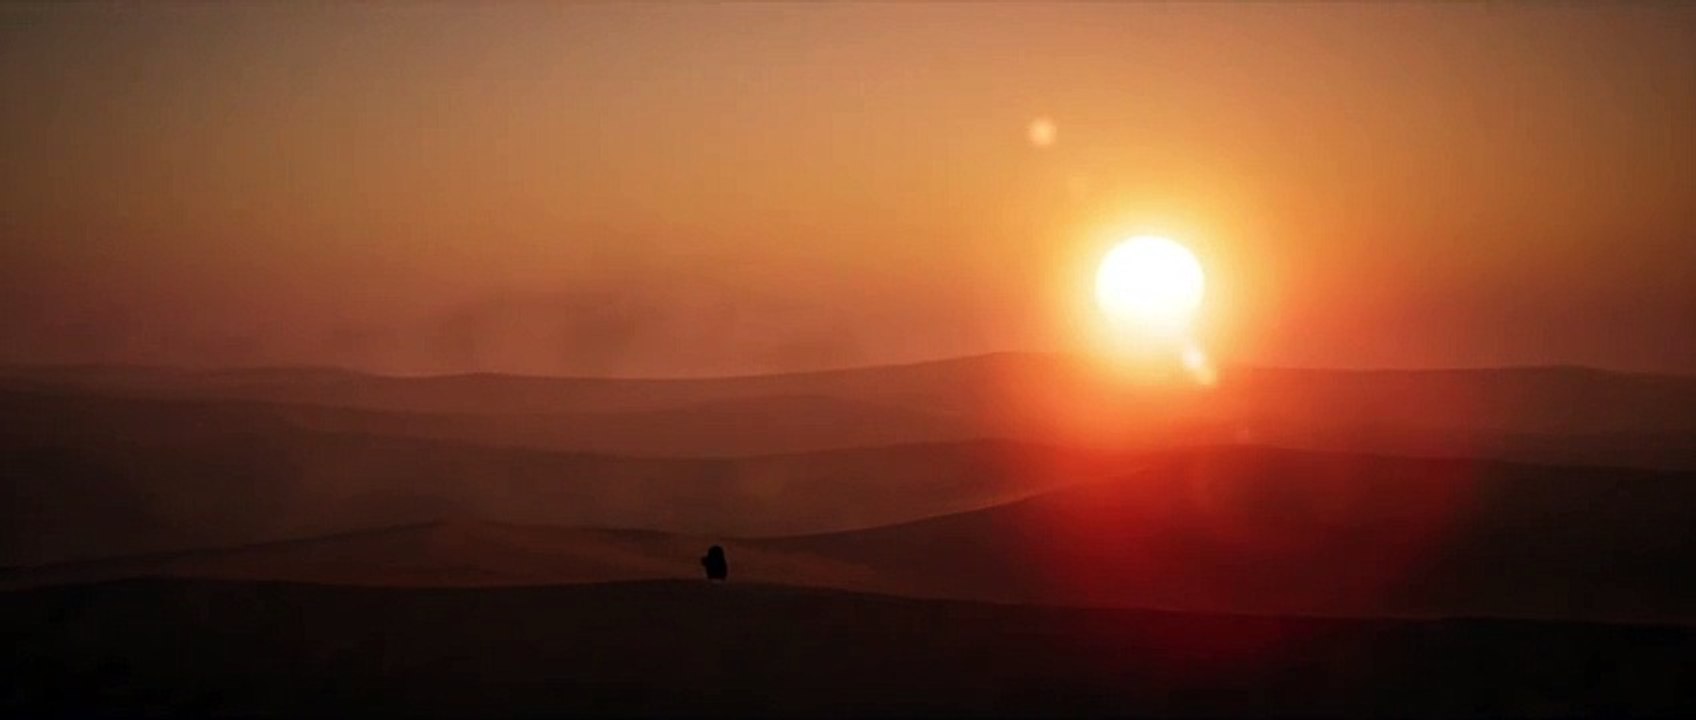 Kung Fu Panda 4 x Dune Trailer (2) OV